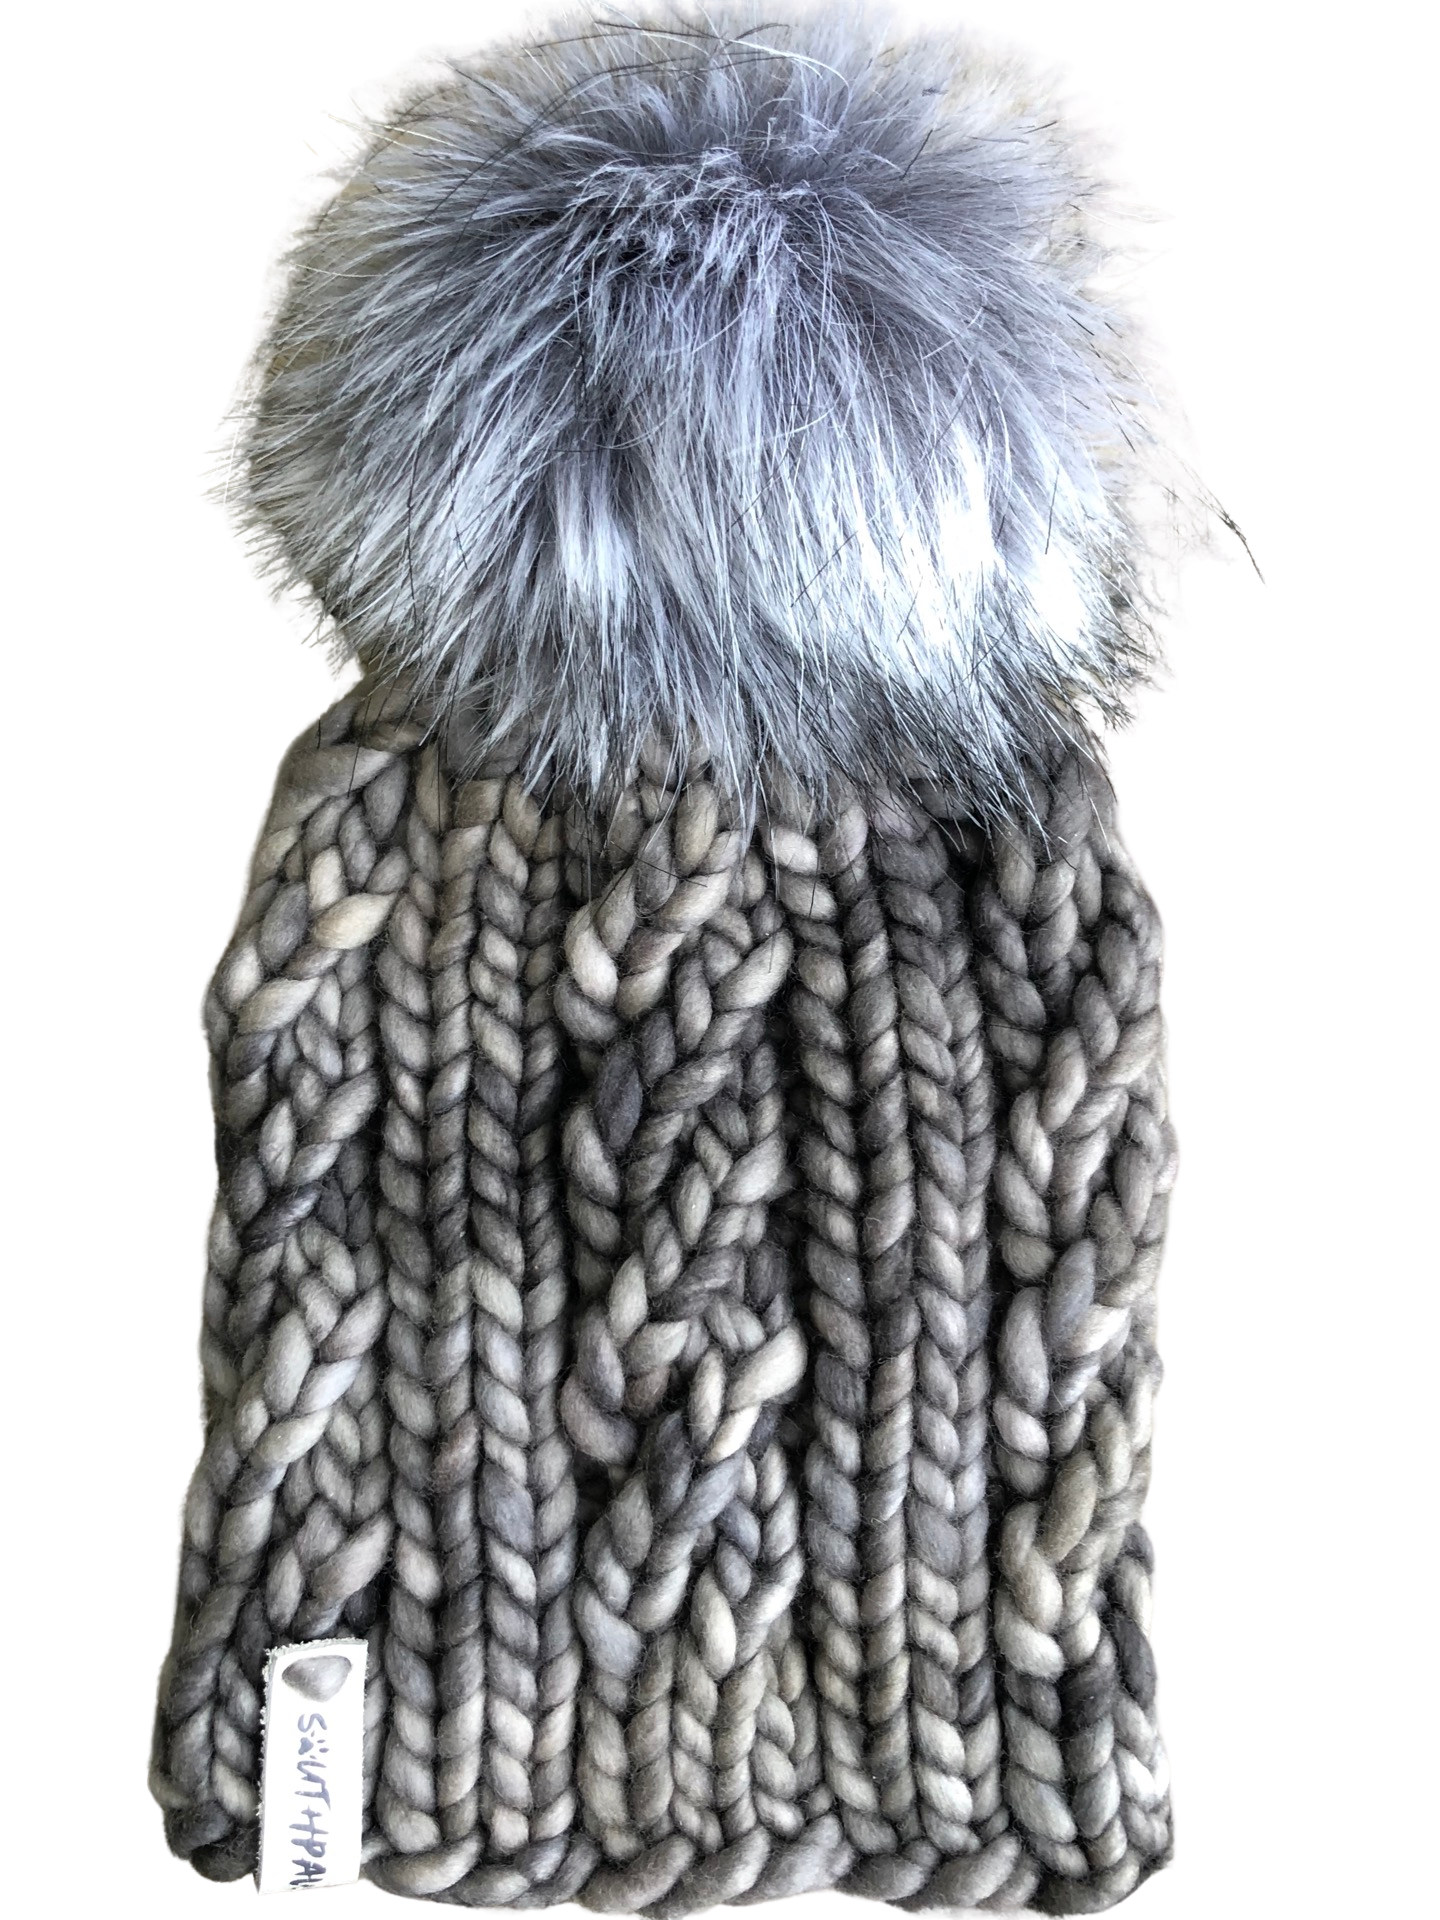 Child's Luxury Hand Knit Hat | Merino Wool Hat | Cloudy Day Grey -hat-SOM-020 | Spindrift Beanie